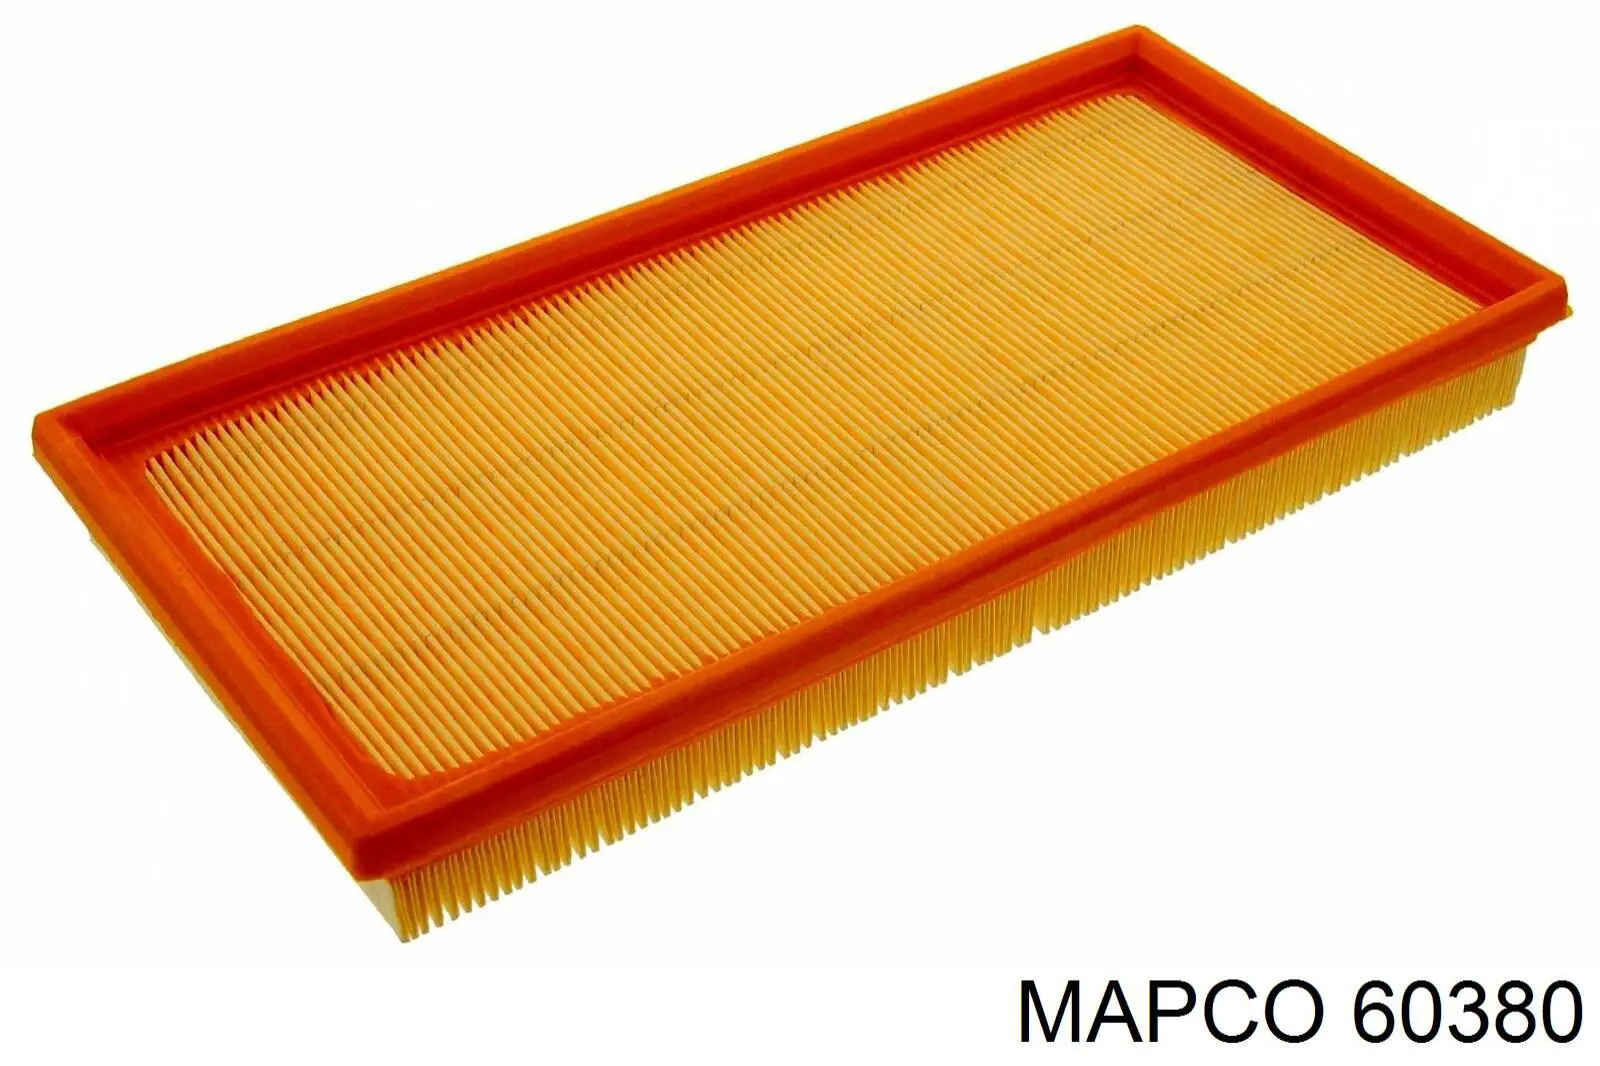 60380 Mapco filtro de aire